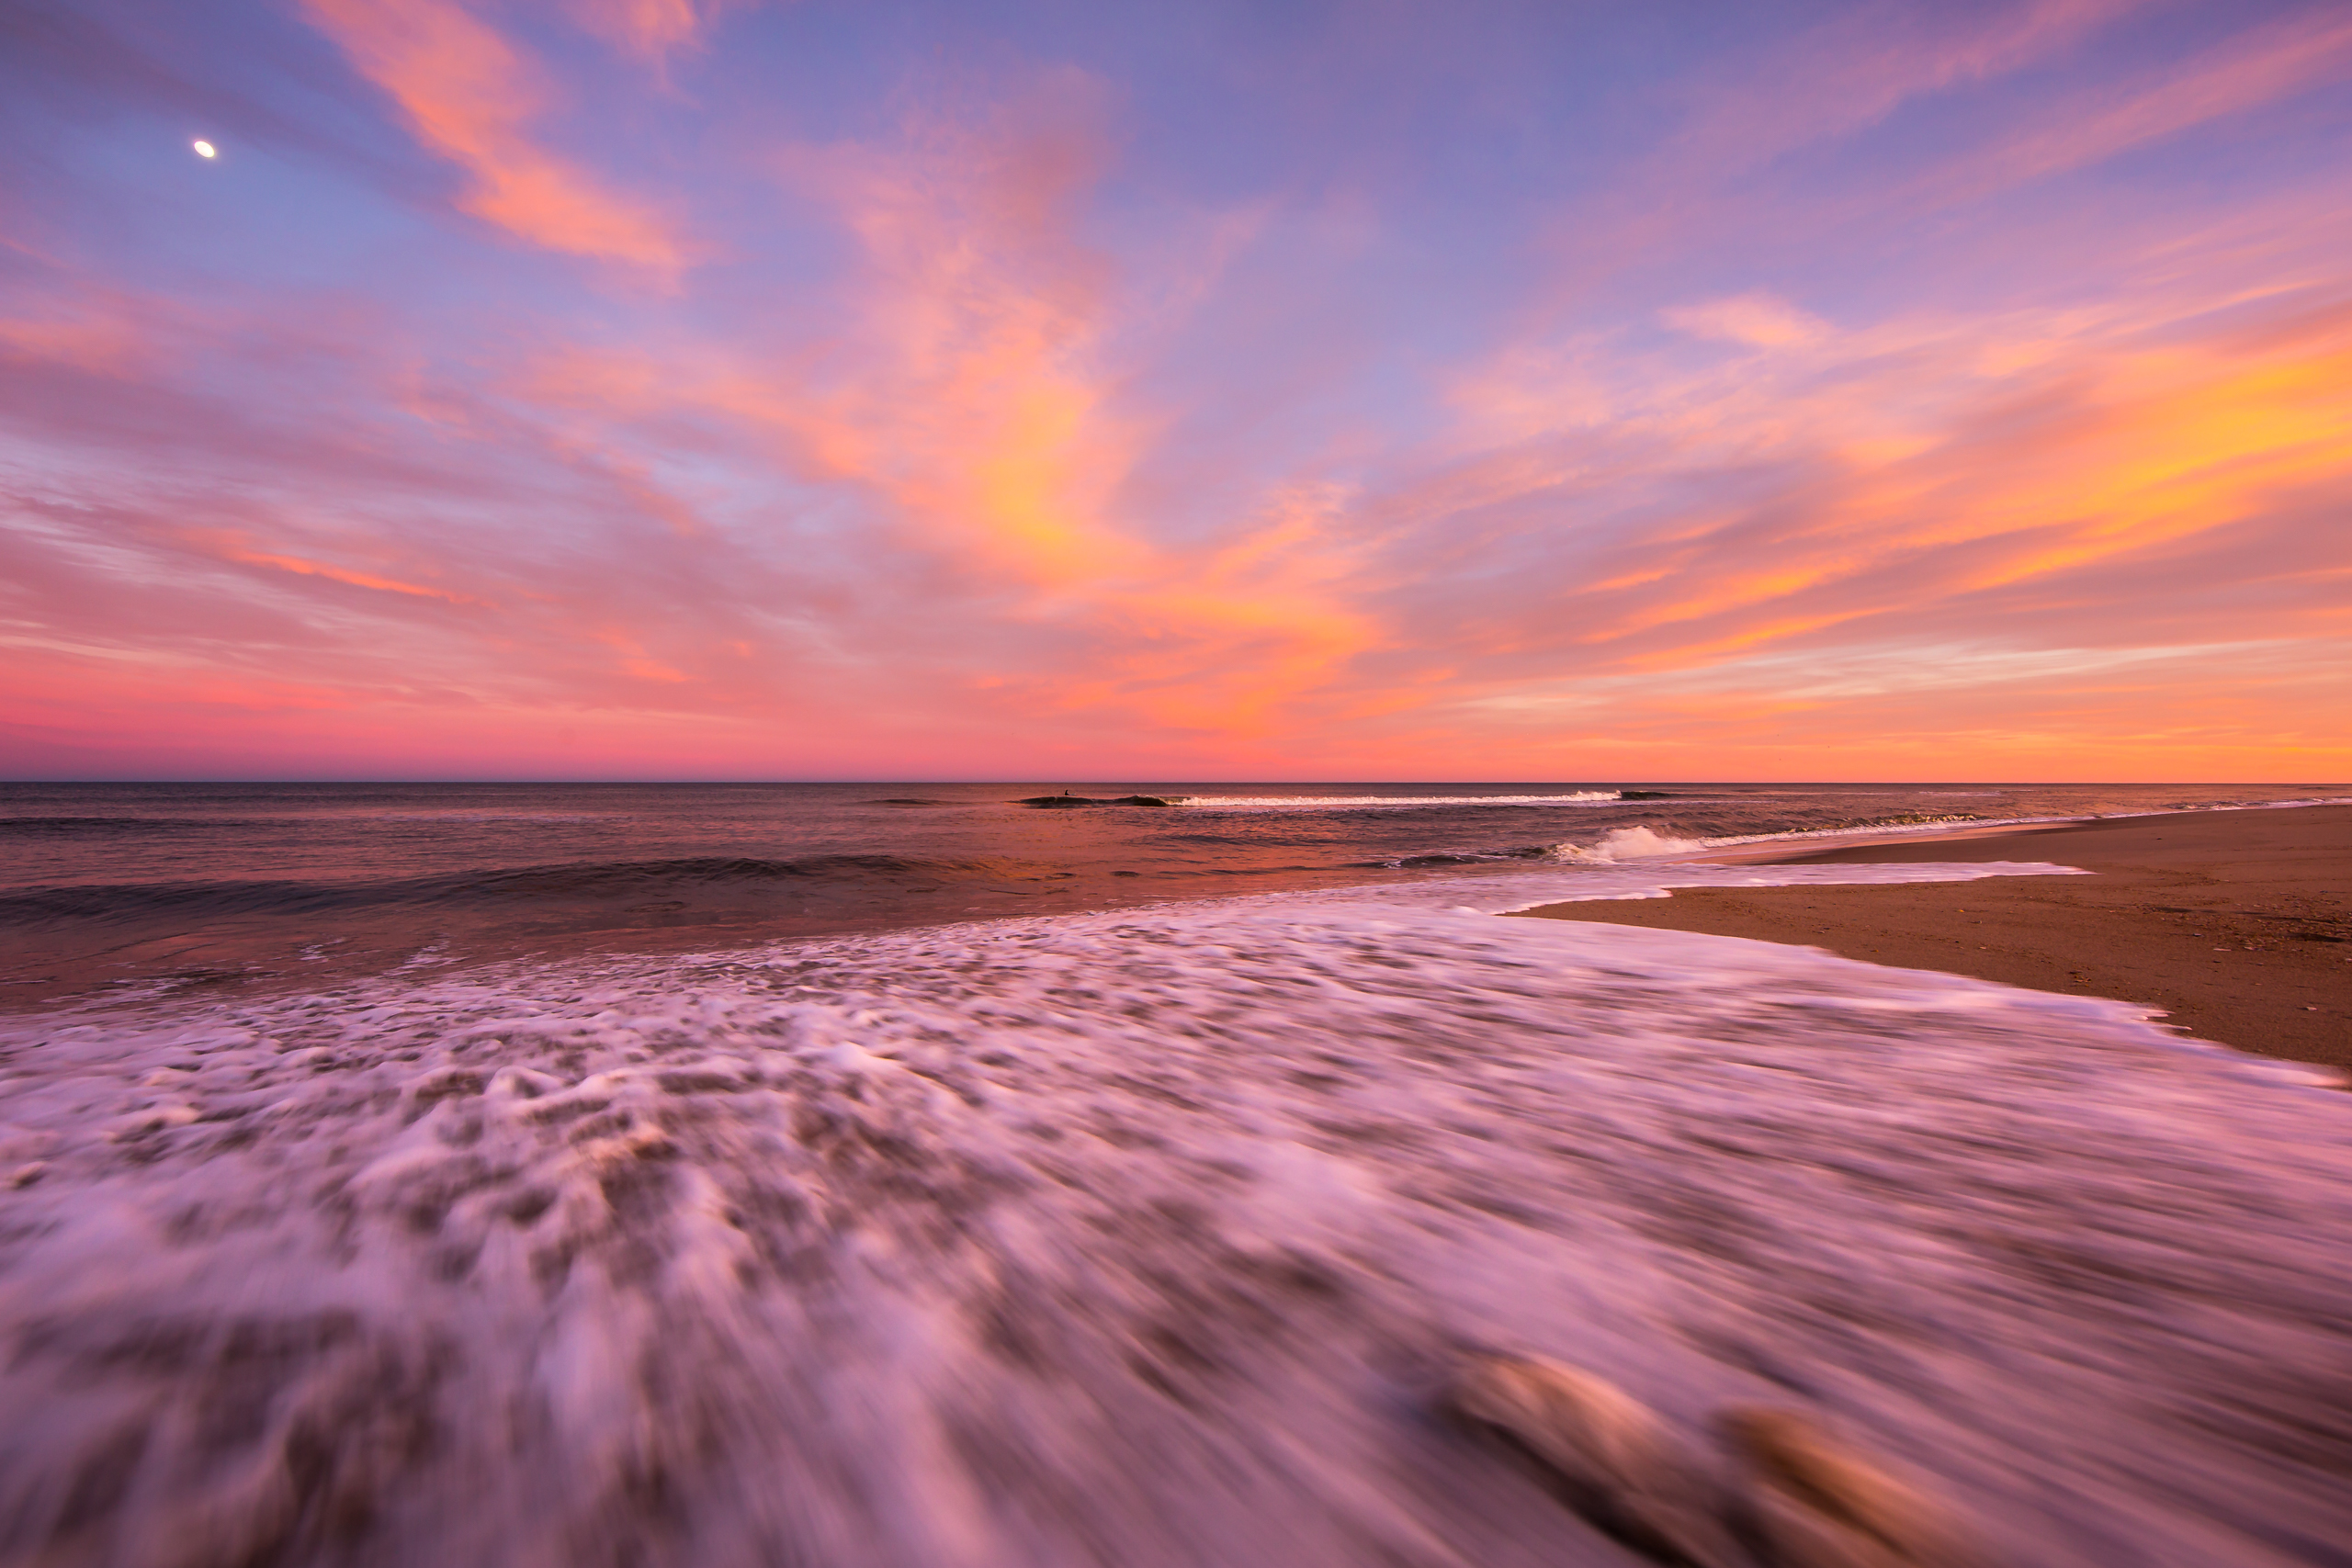 Explosive sunset photo over rushing Atlantic Ocean wash.